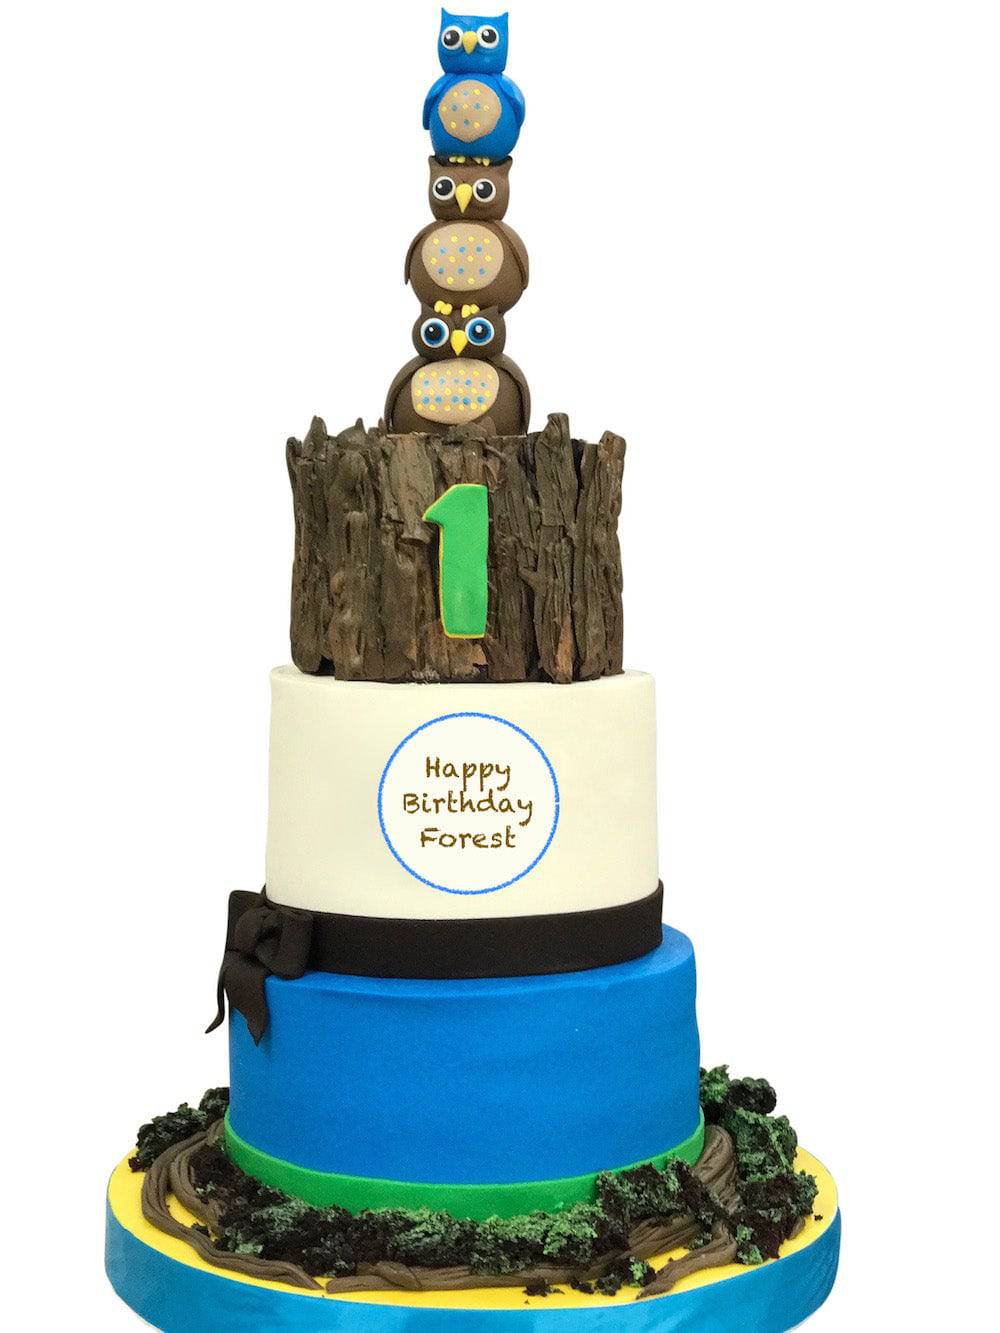 Forest Birthday Cake - Sweet E's Bake Shop